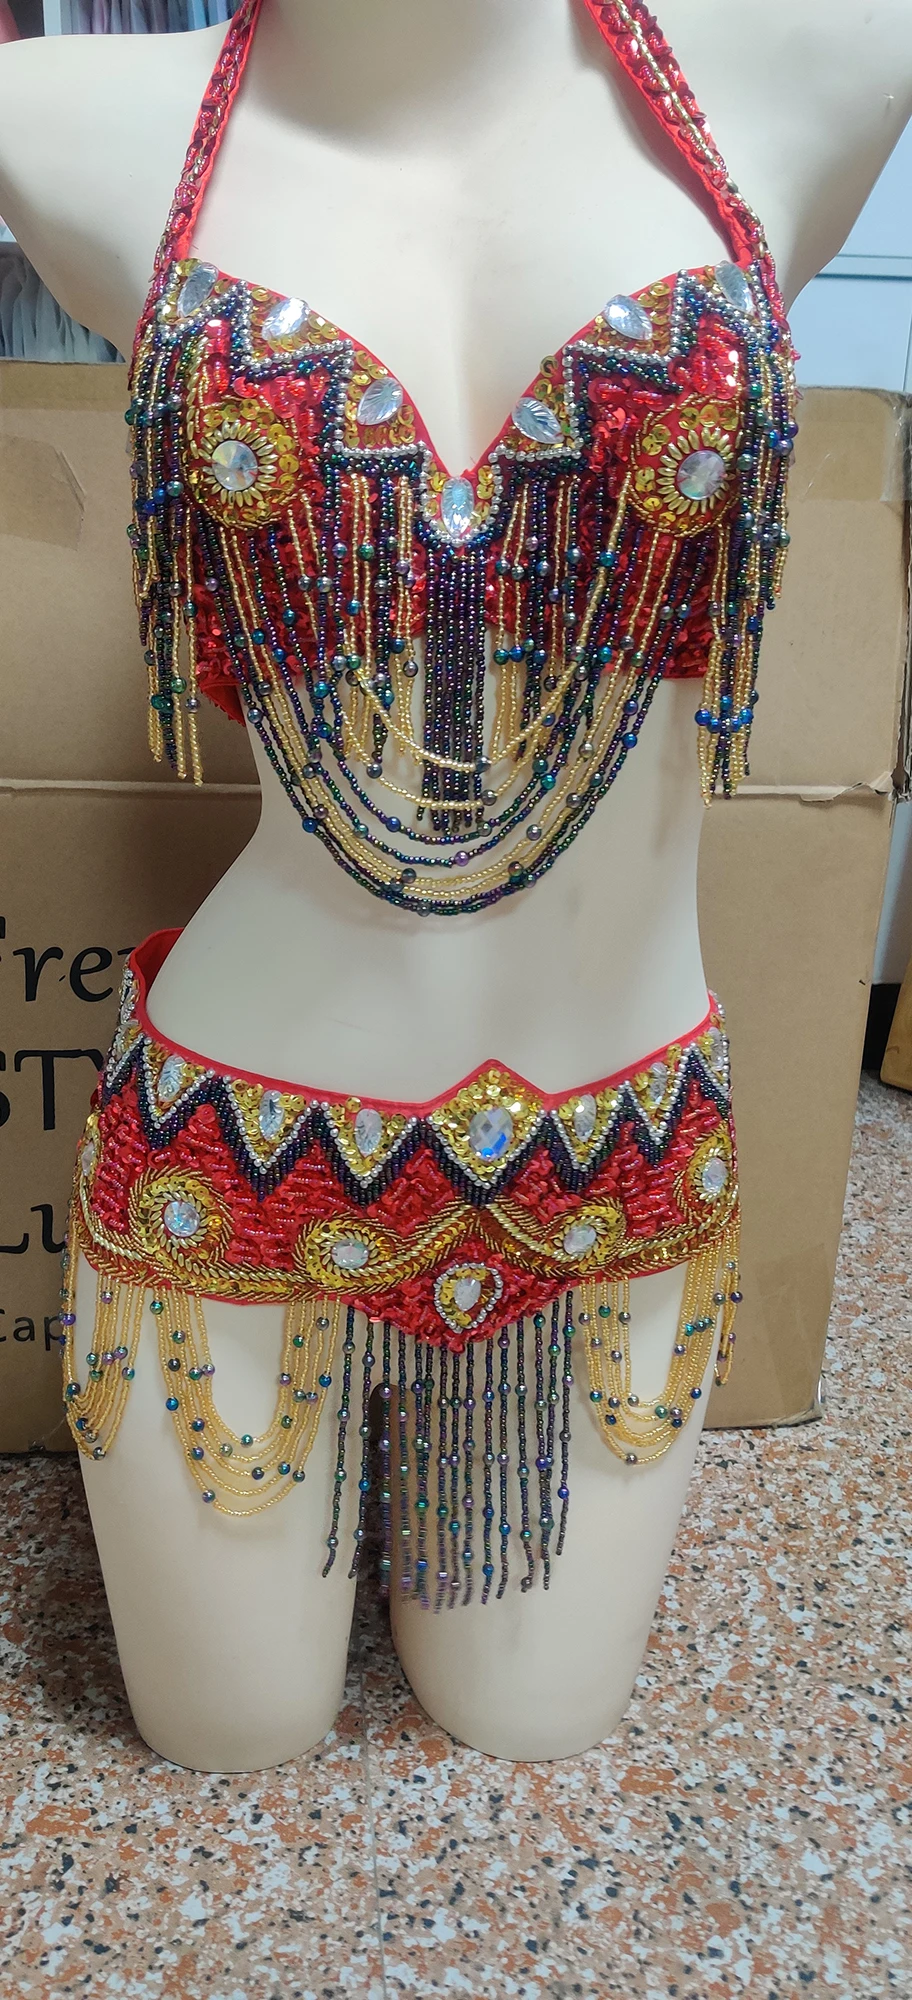 Special Customizable Hand Beaded Oriental Belly Dance Costumes Bra Belt XL Size 20-30 days